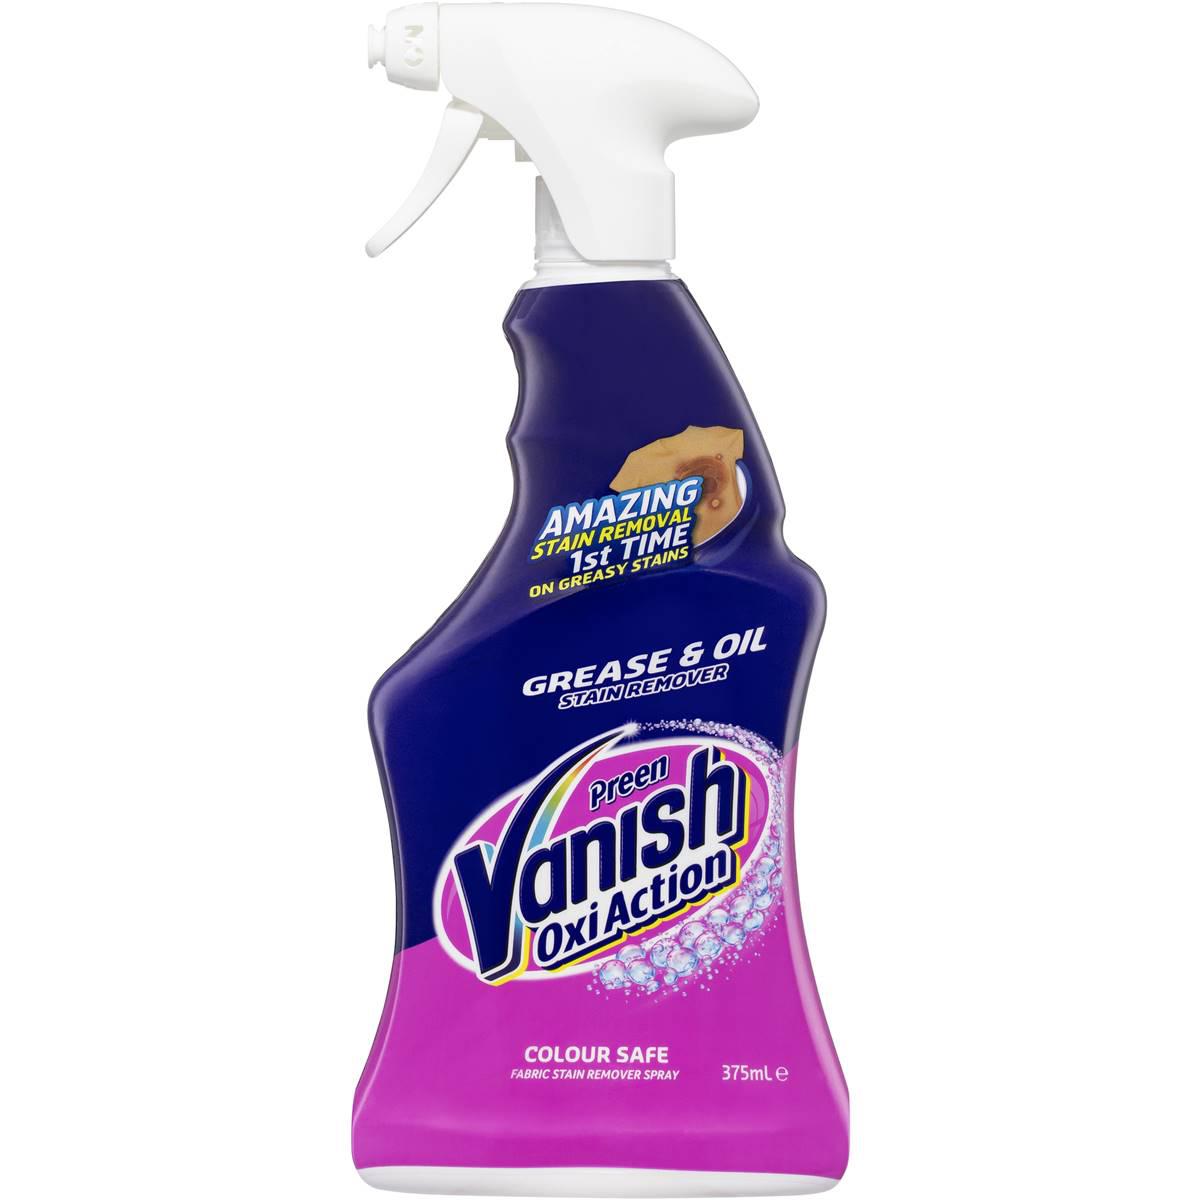 Vanish Preen Ultra Degreaser Fabric Stain Remover Spray 375ml